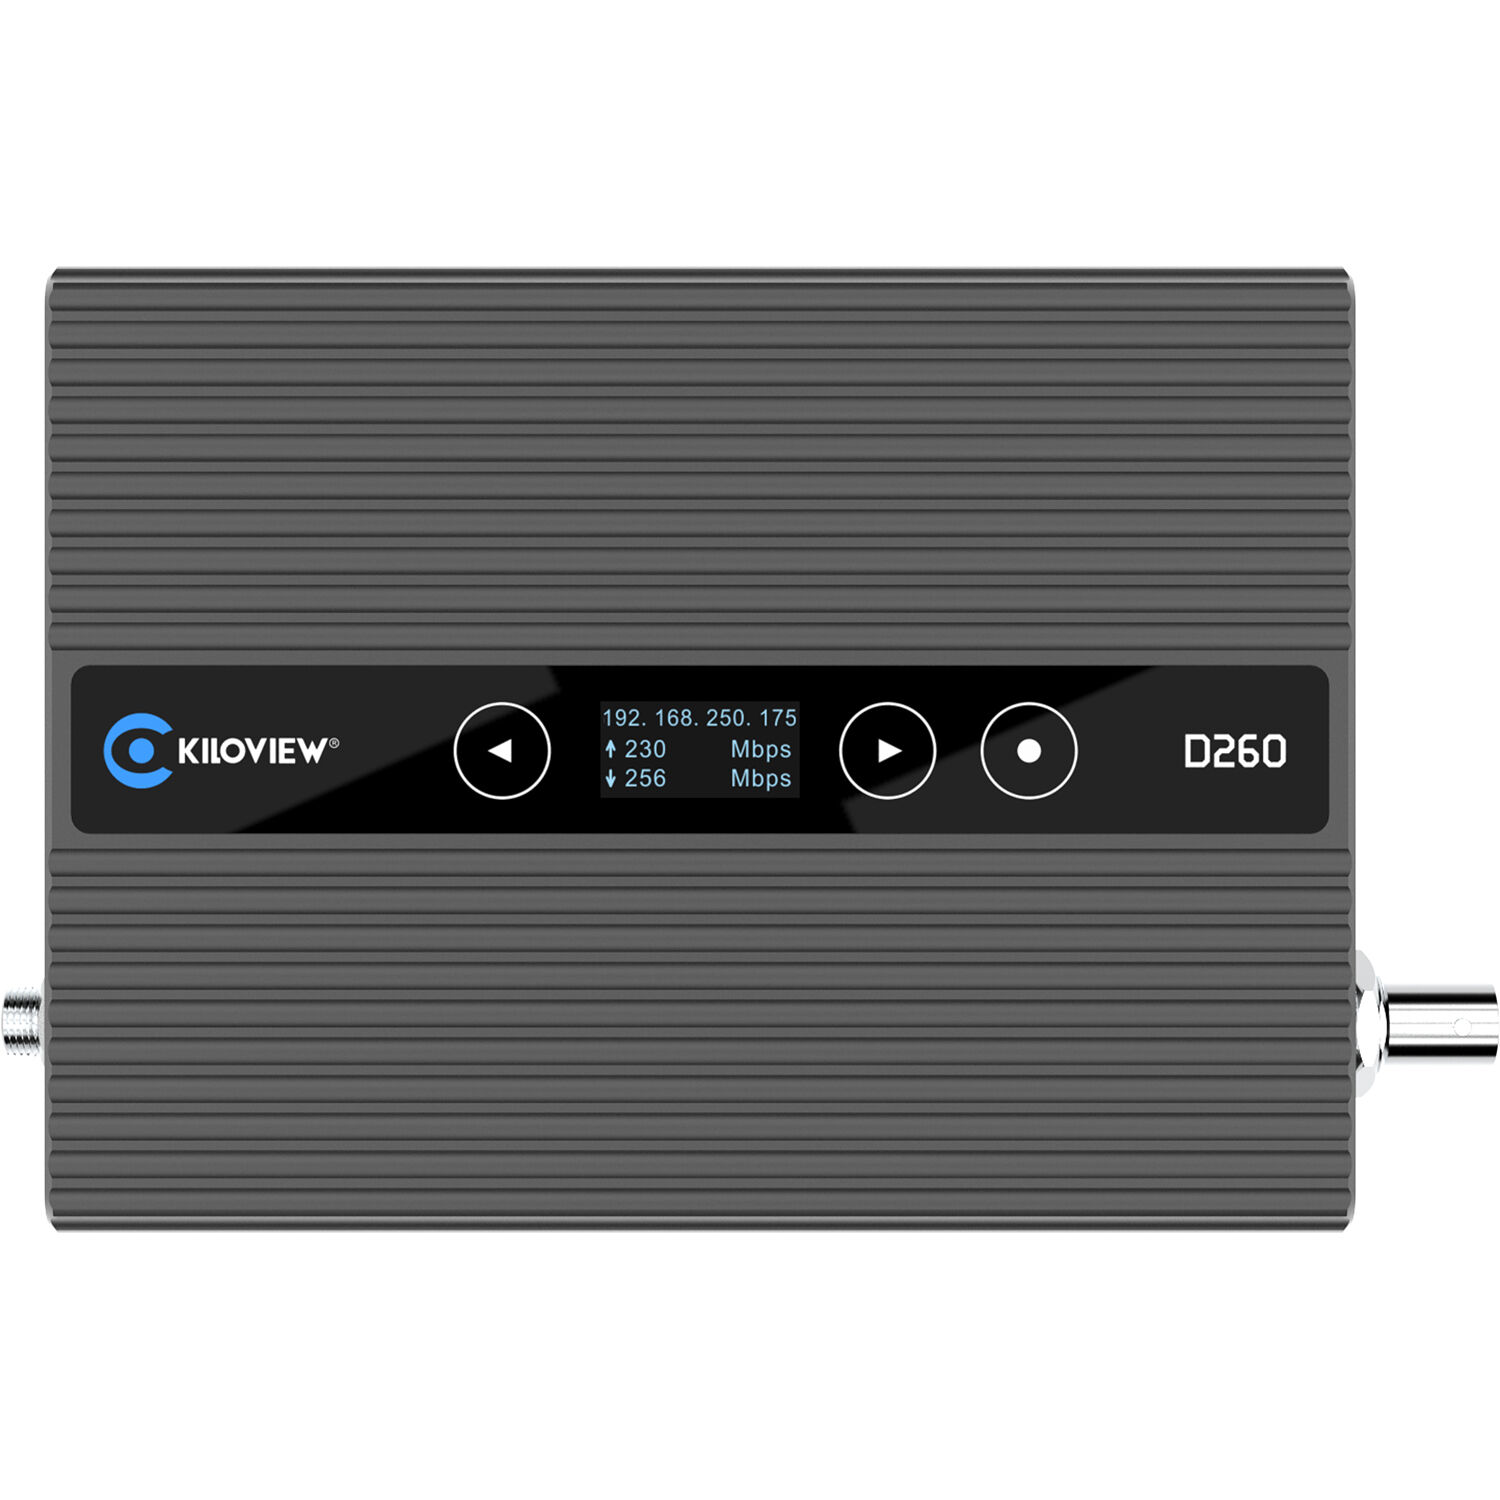 D260  ממיר IP  ל SDI/HDMI איכות HD מבית  Kiloview 